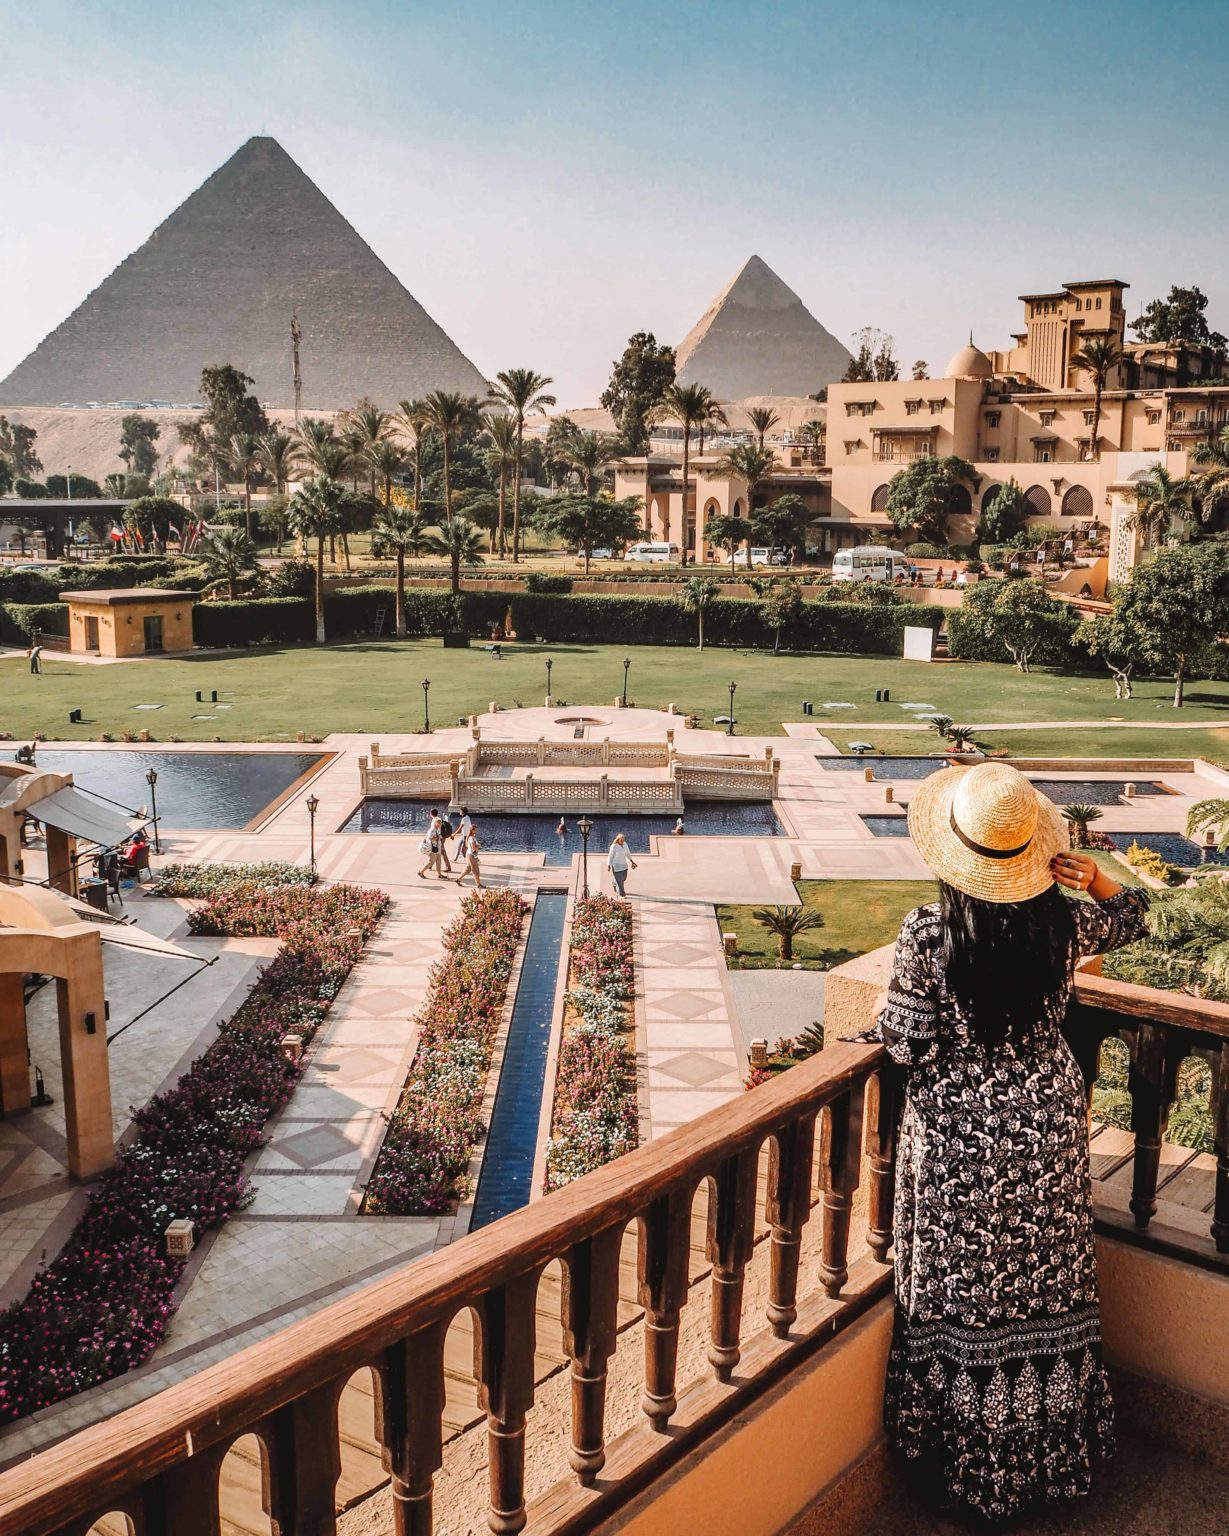 Marriott Mena House facing the pyramids seen on our best Egypt safari